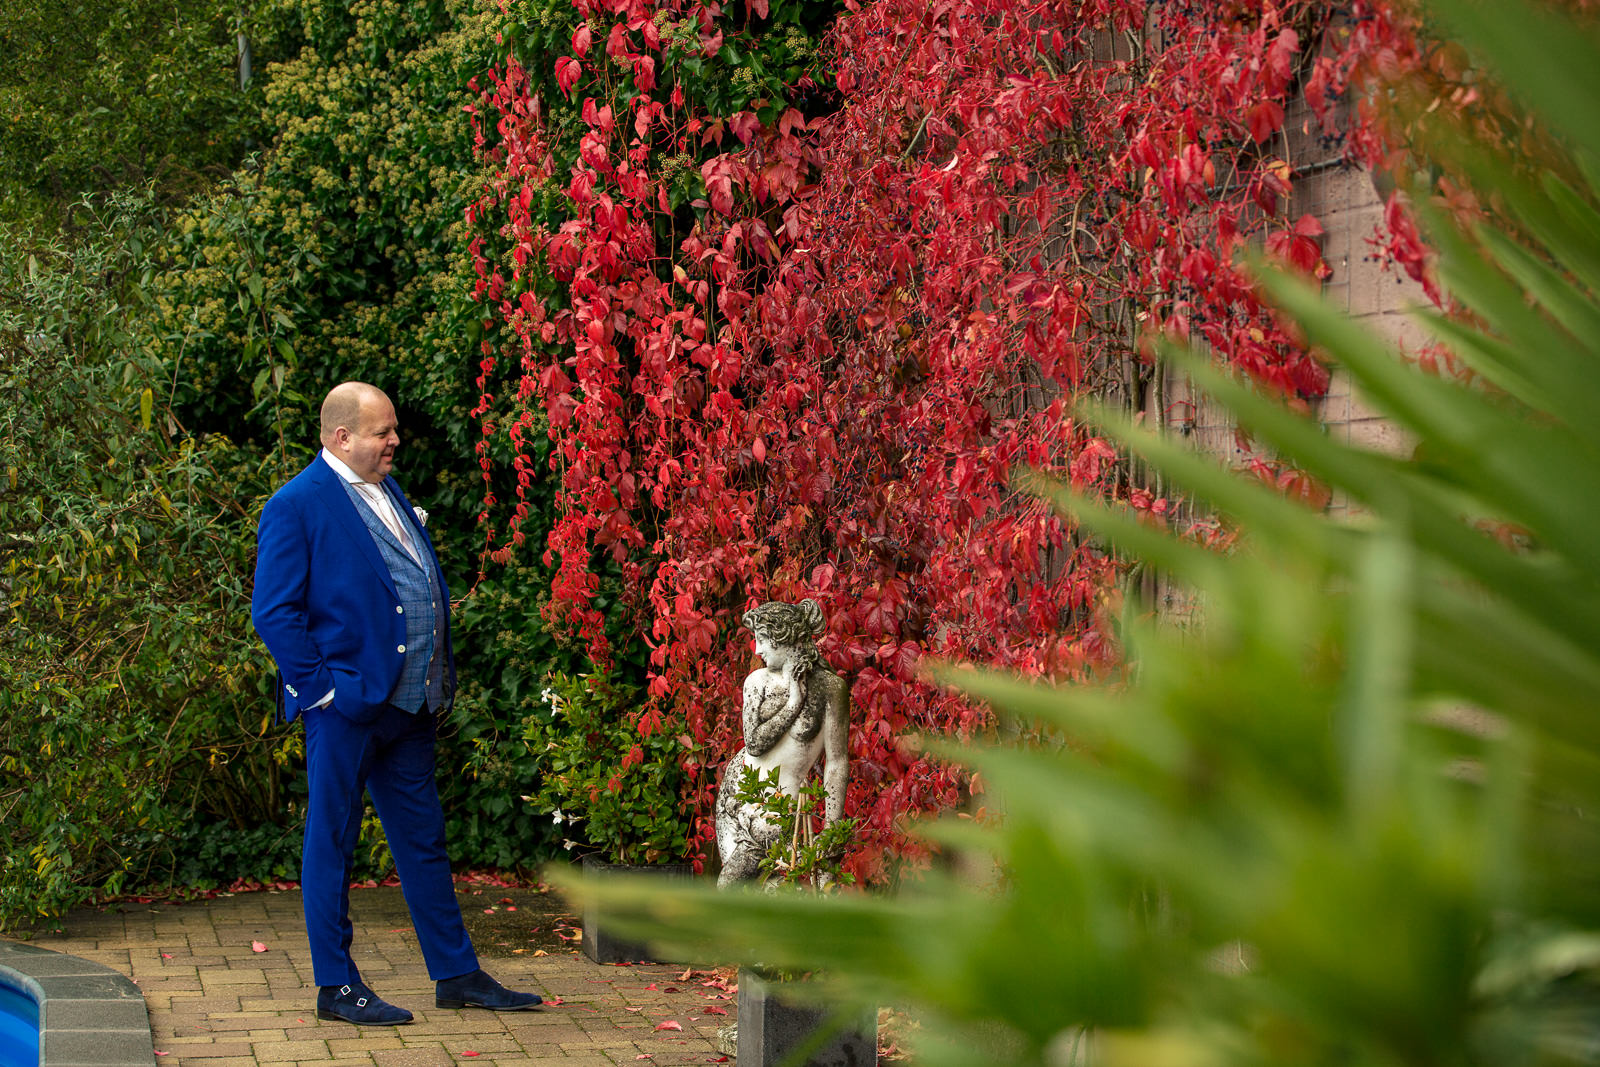 Trouwfotograaf Roosendaal bruidegom wacht op bruid voor first look